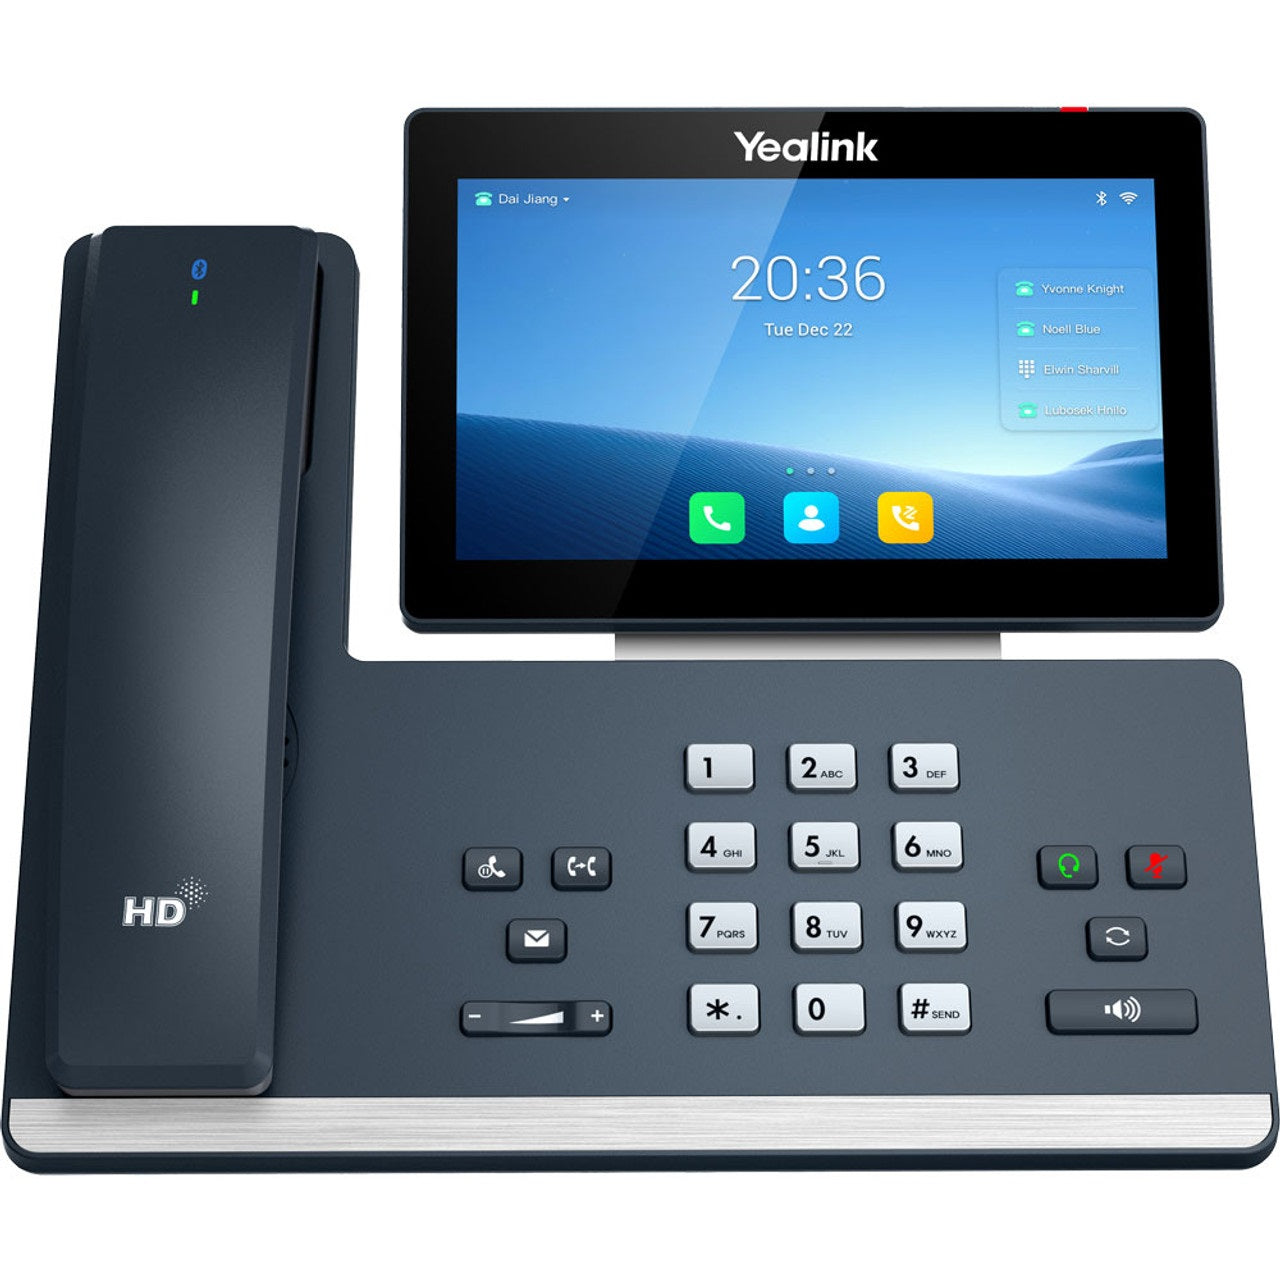 Yealink-T58W-Pro-Gigabit-IP-Phone-Front